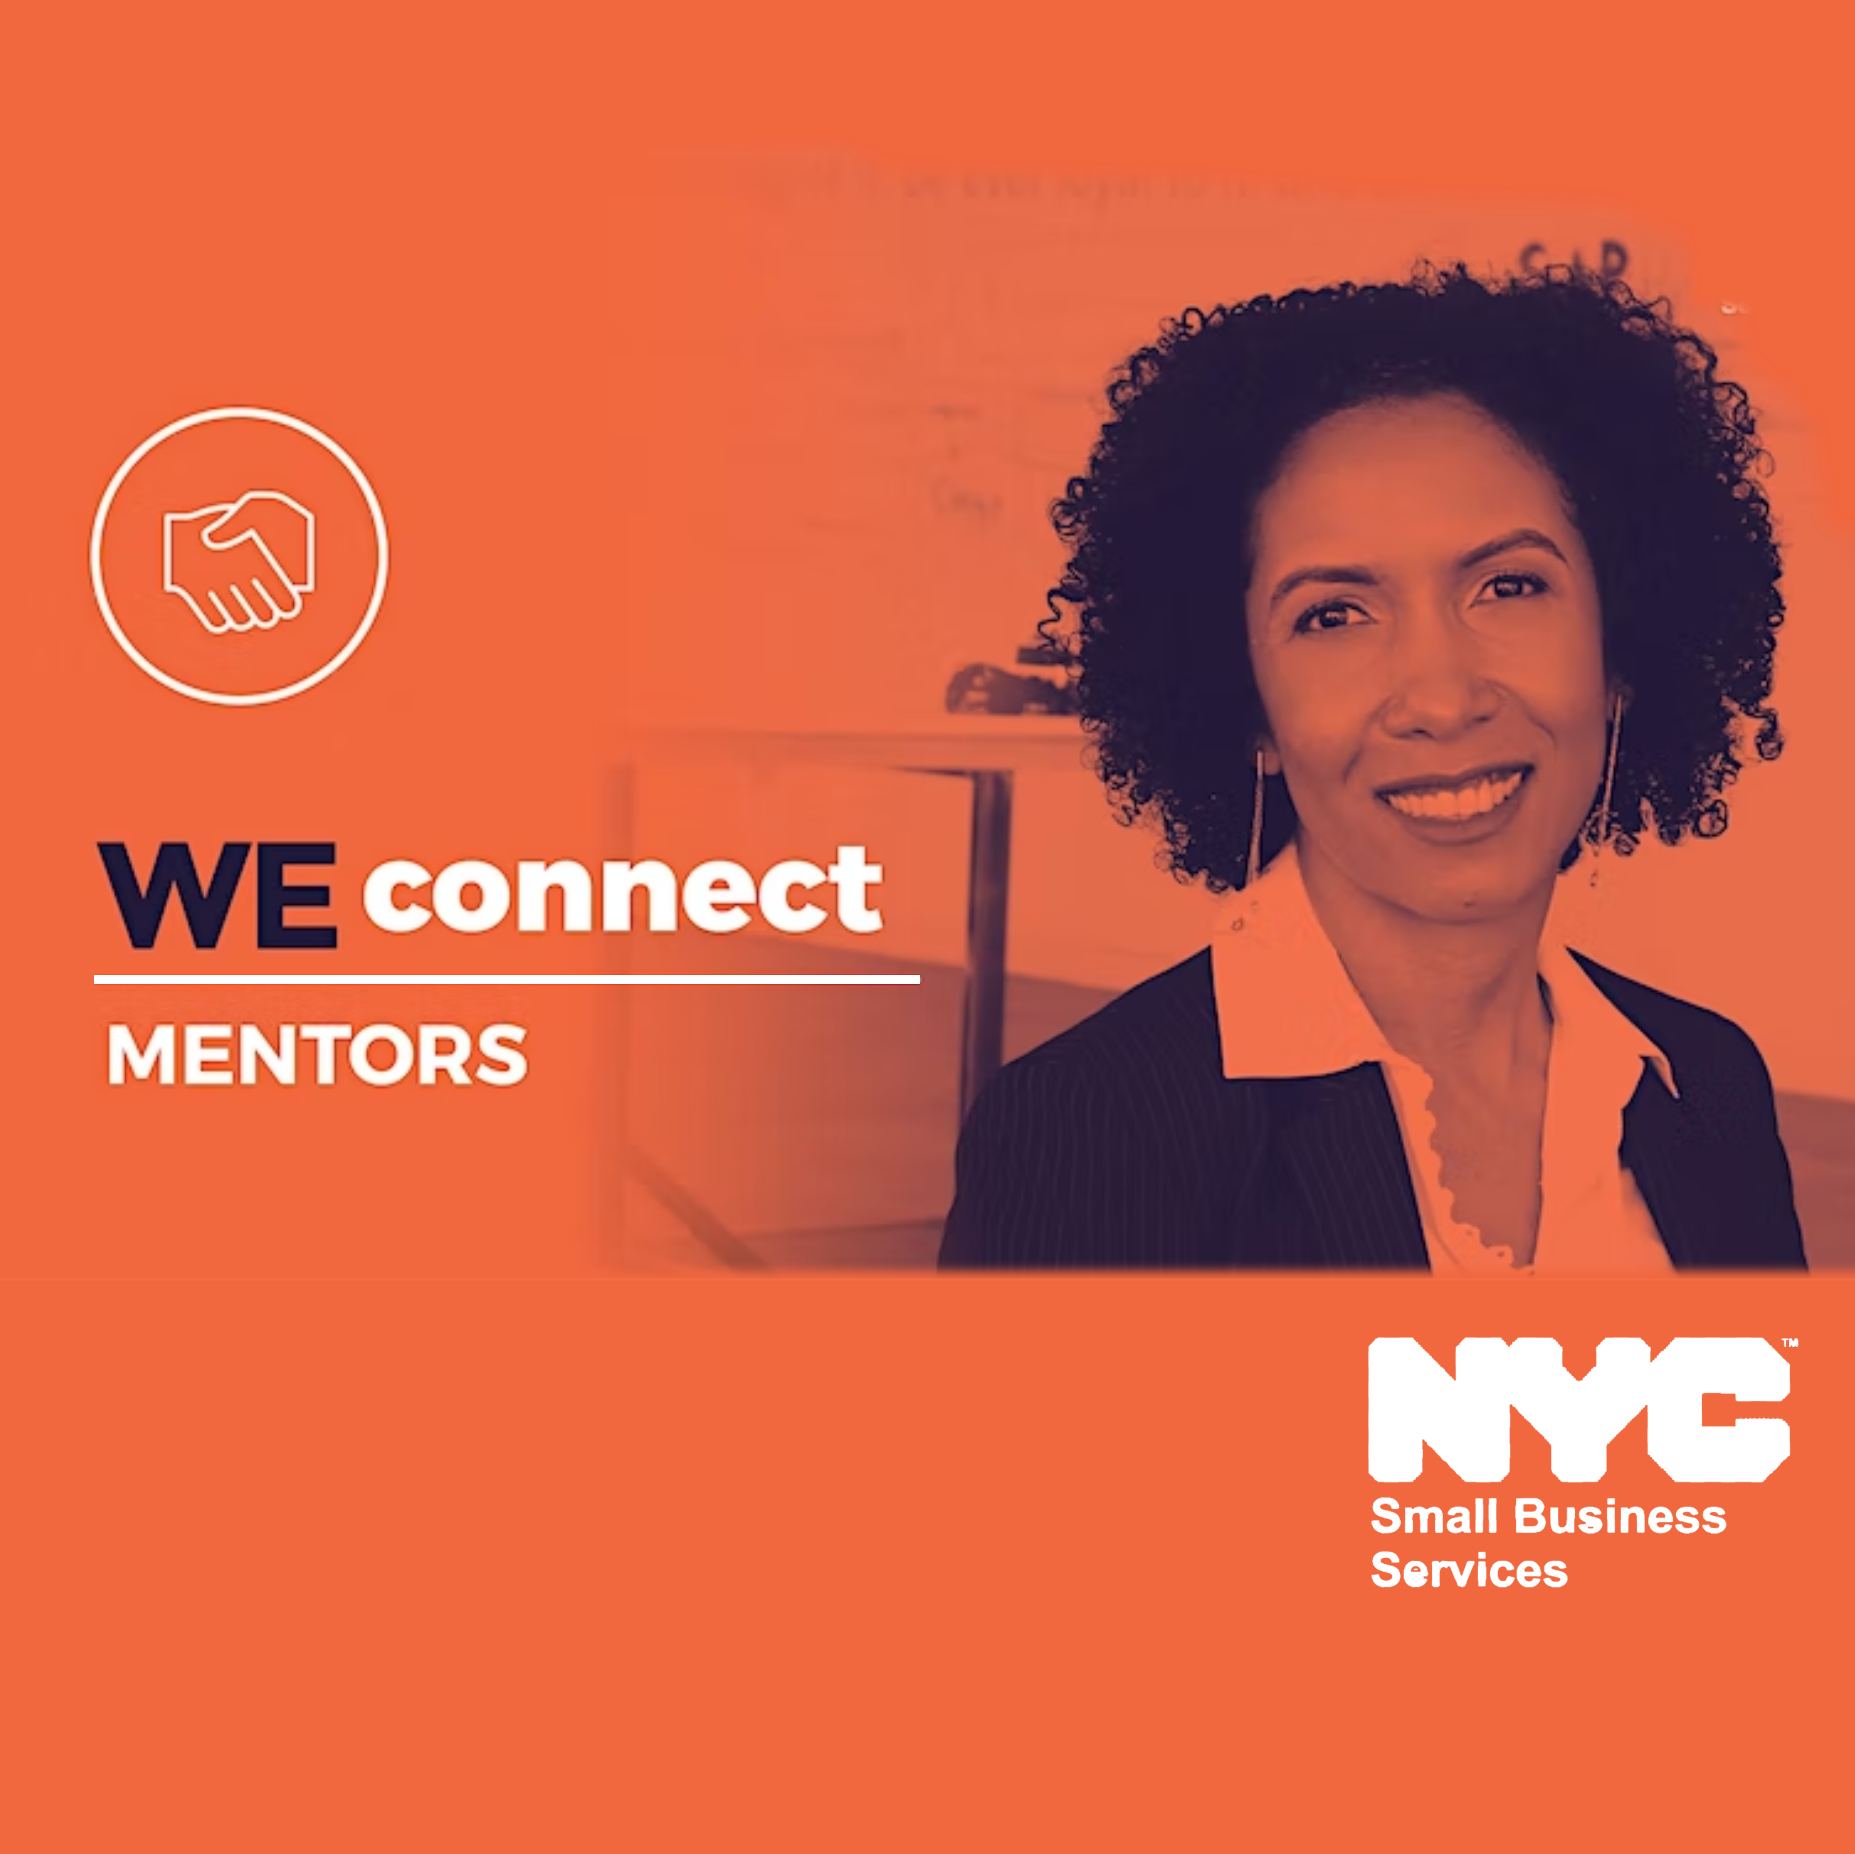 Women Entrepreneurs NYC (WE NYC)